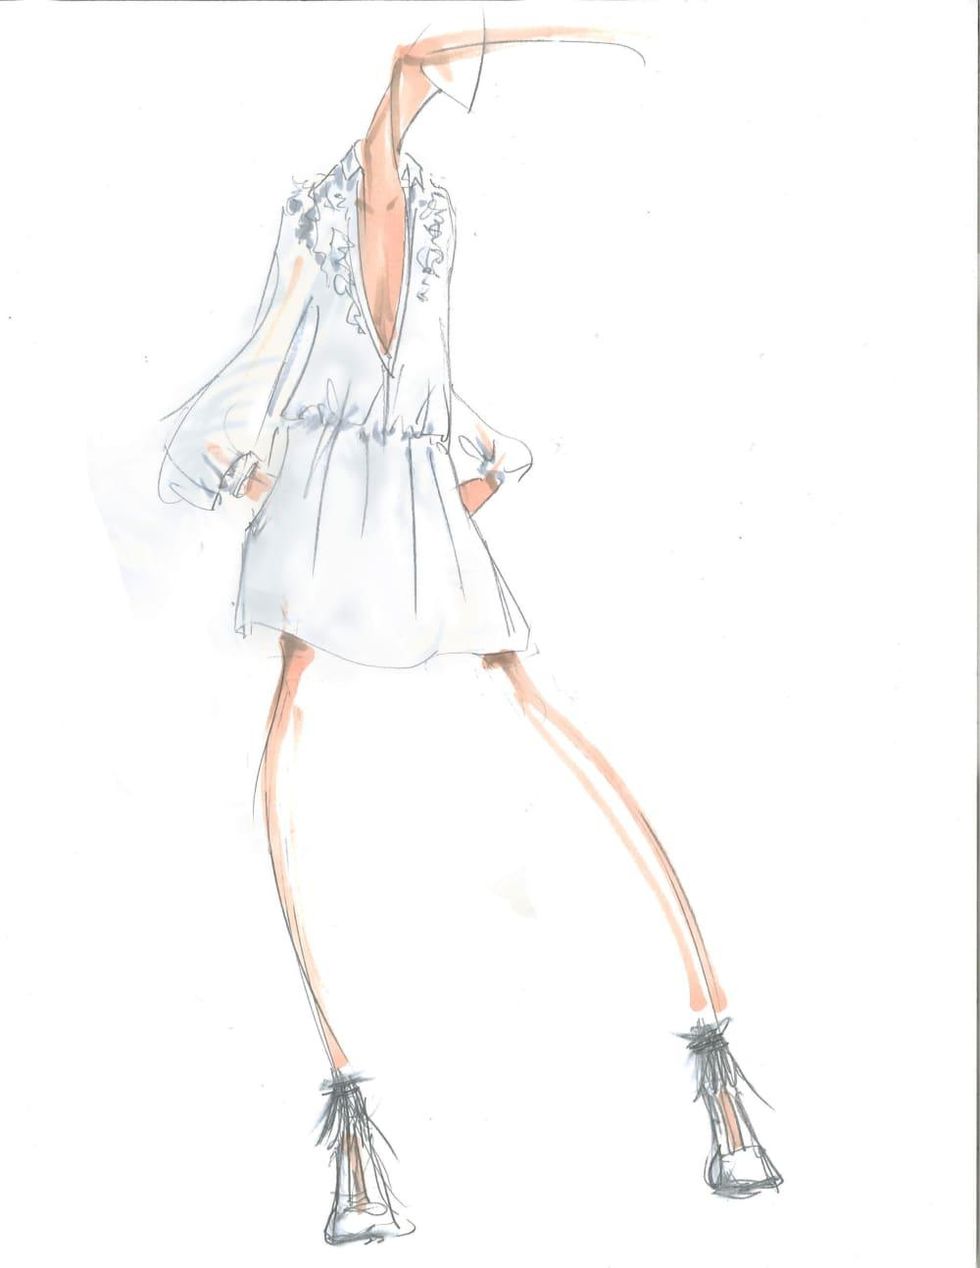 BCBG Max Azria inspiration sketch fall 2016 collection New York Fashion Week